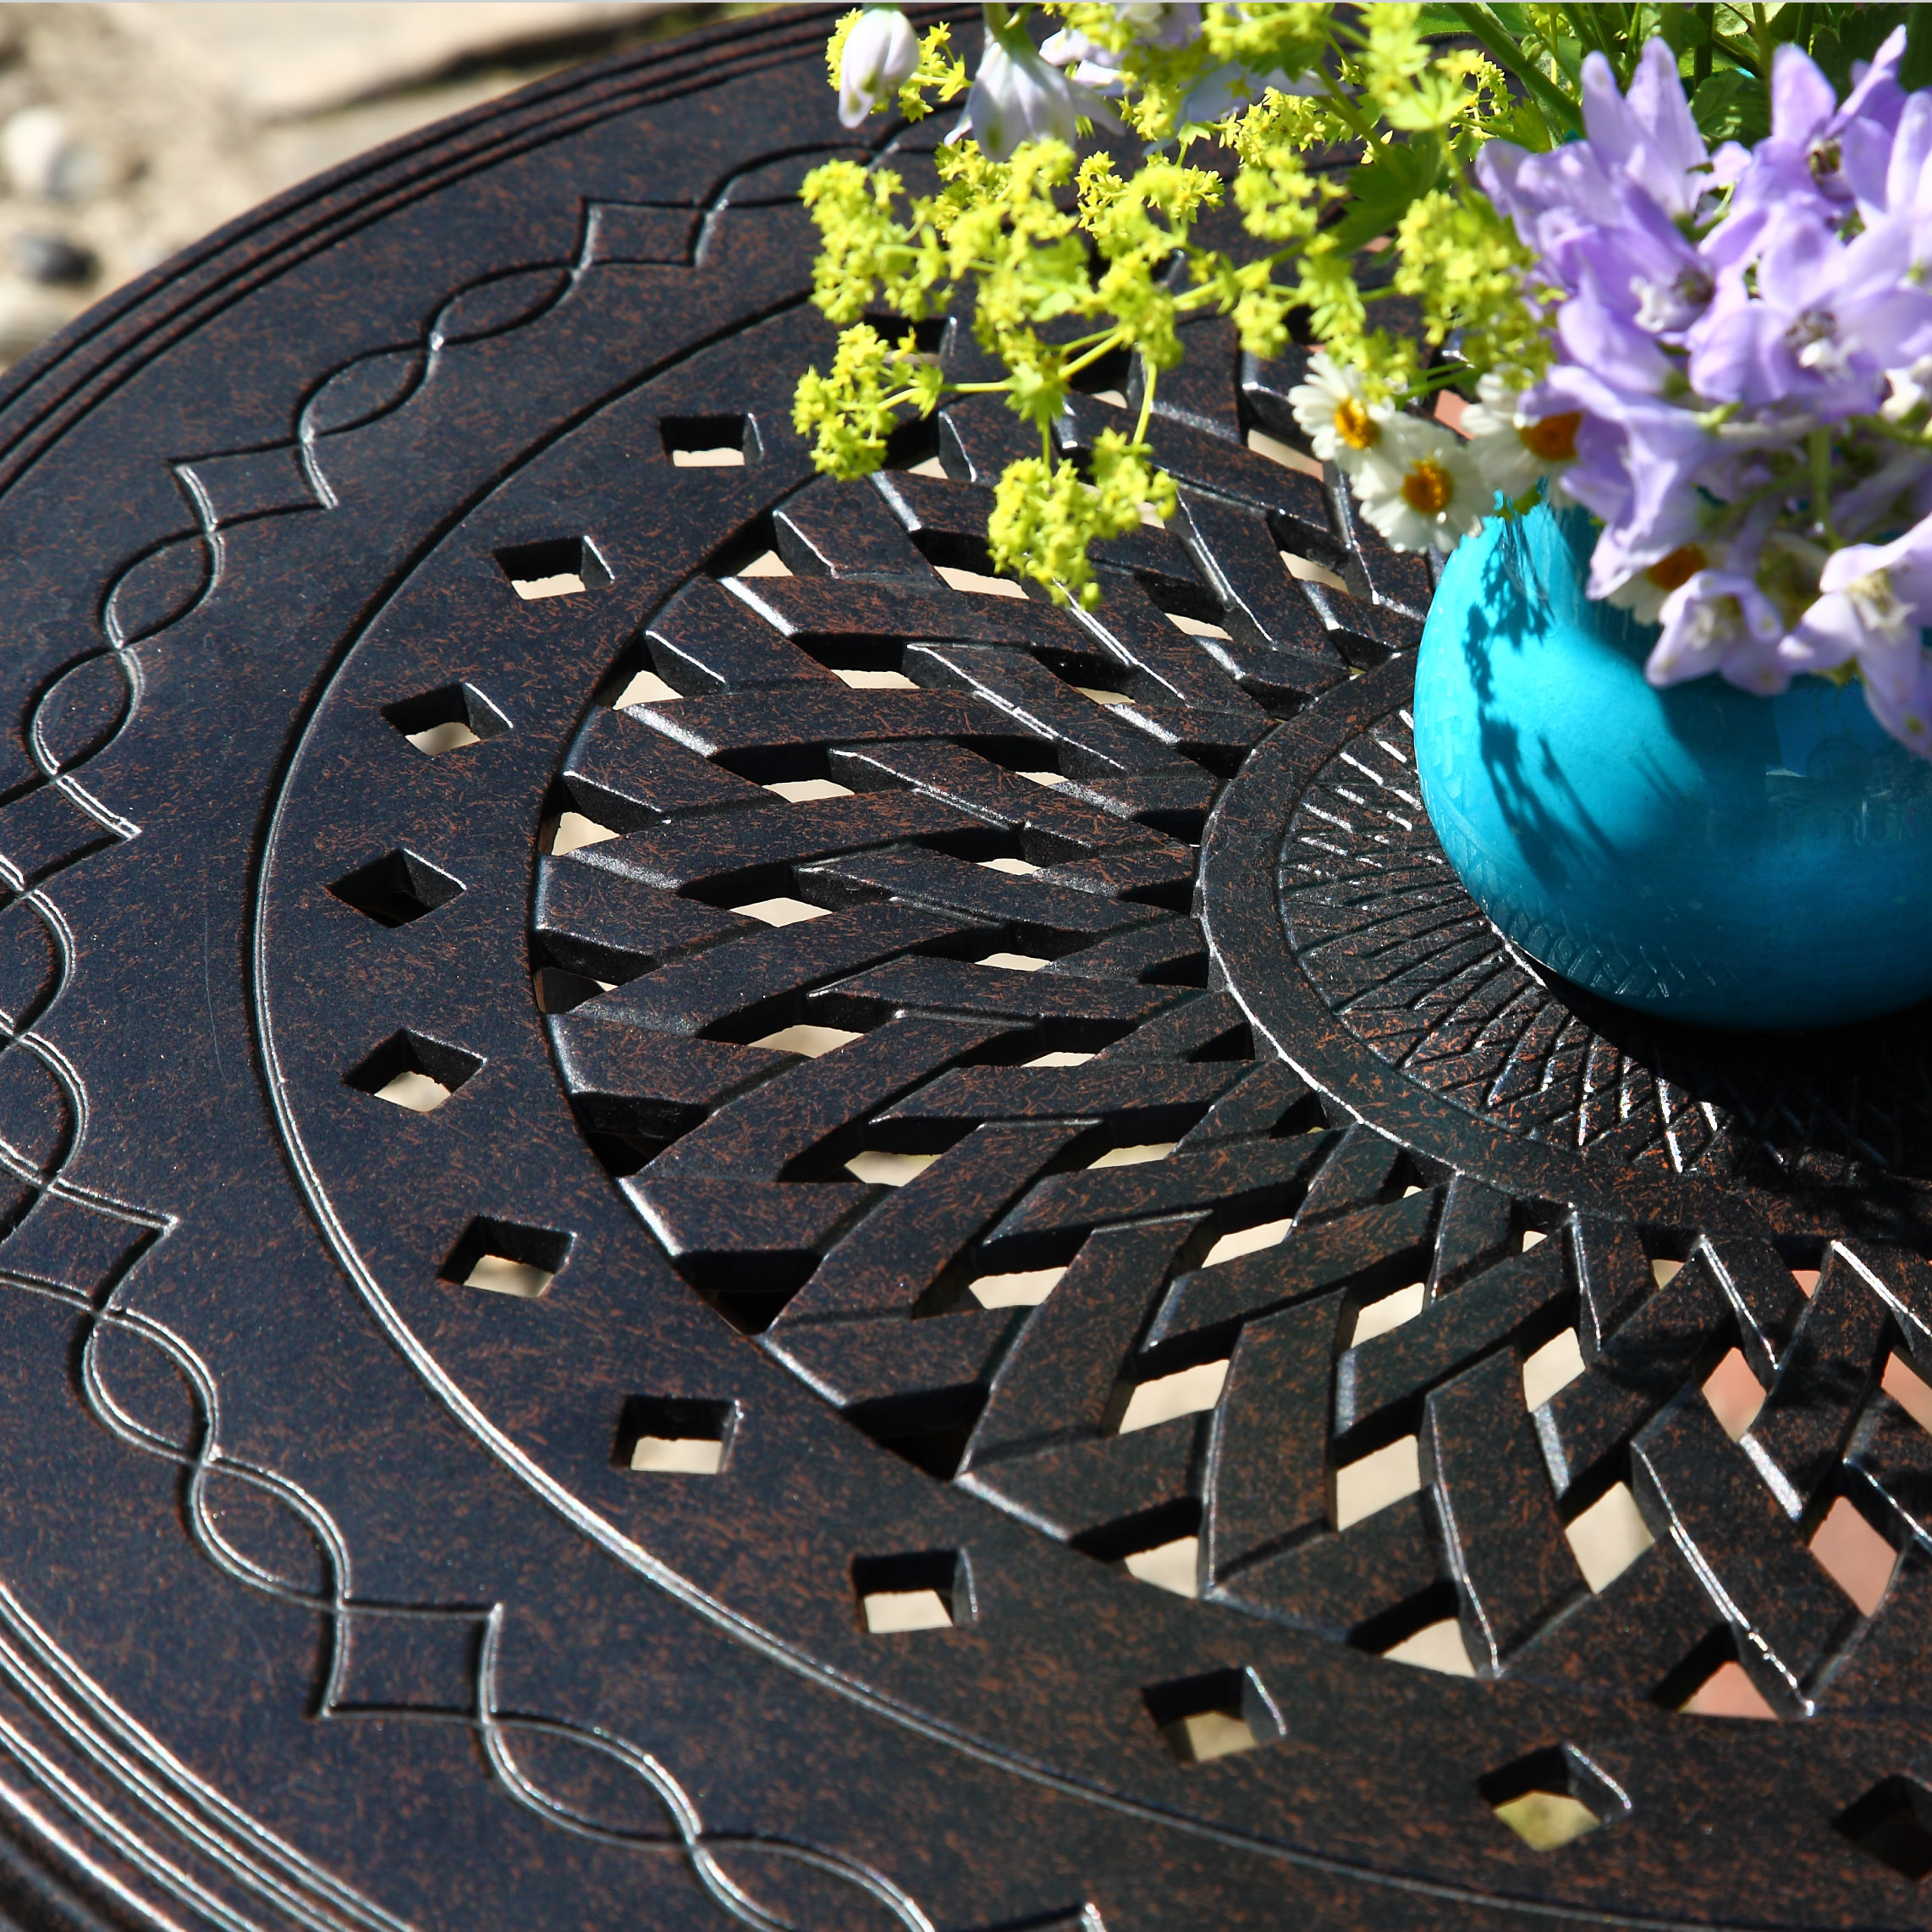 Will black metal garden furniture absorb heat in summer?